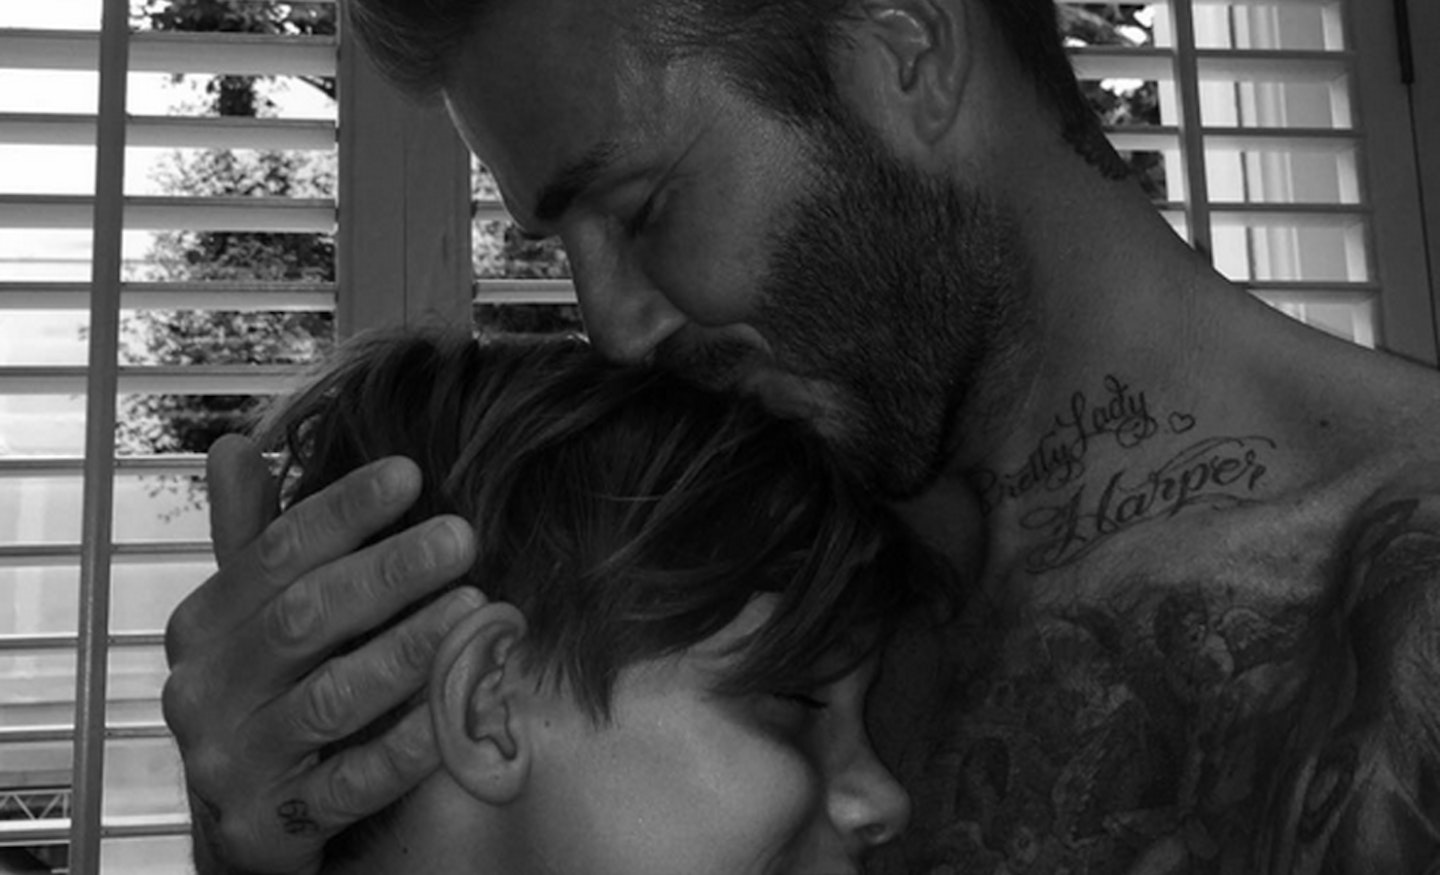 Romeo and David Beckham, September 2015